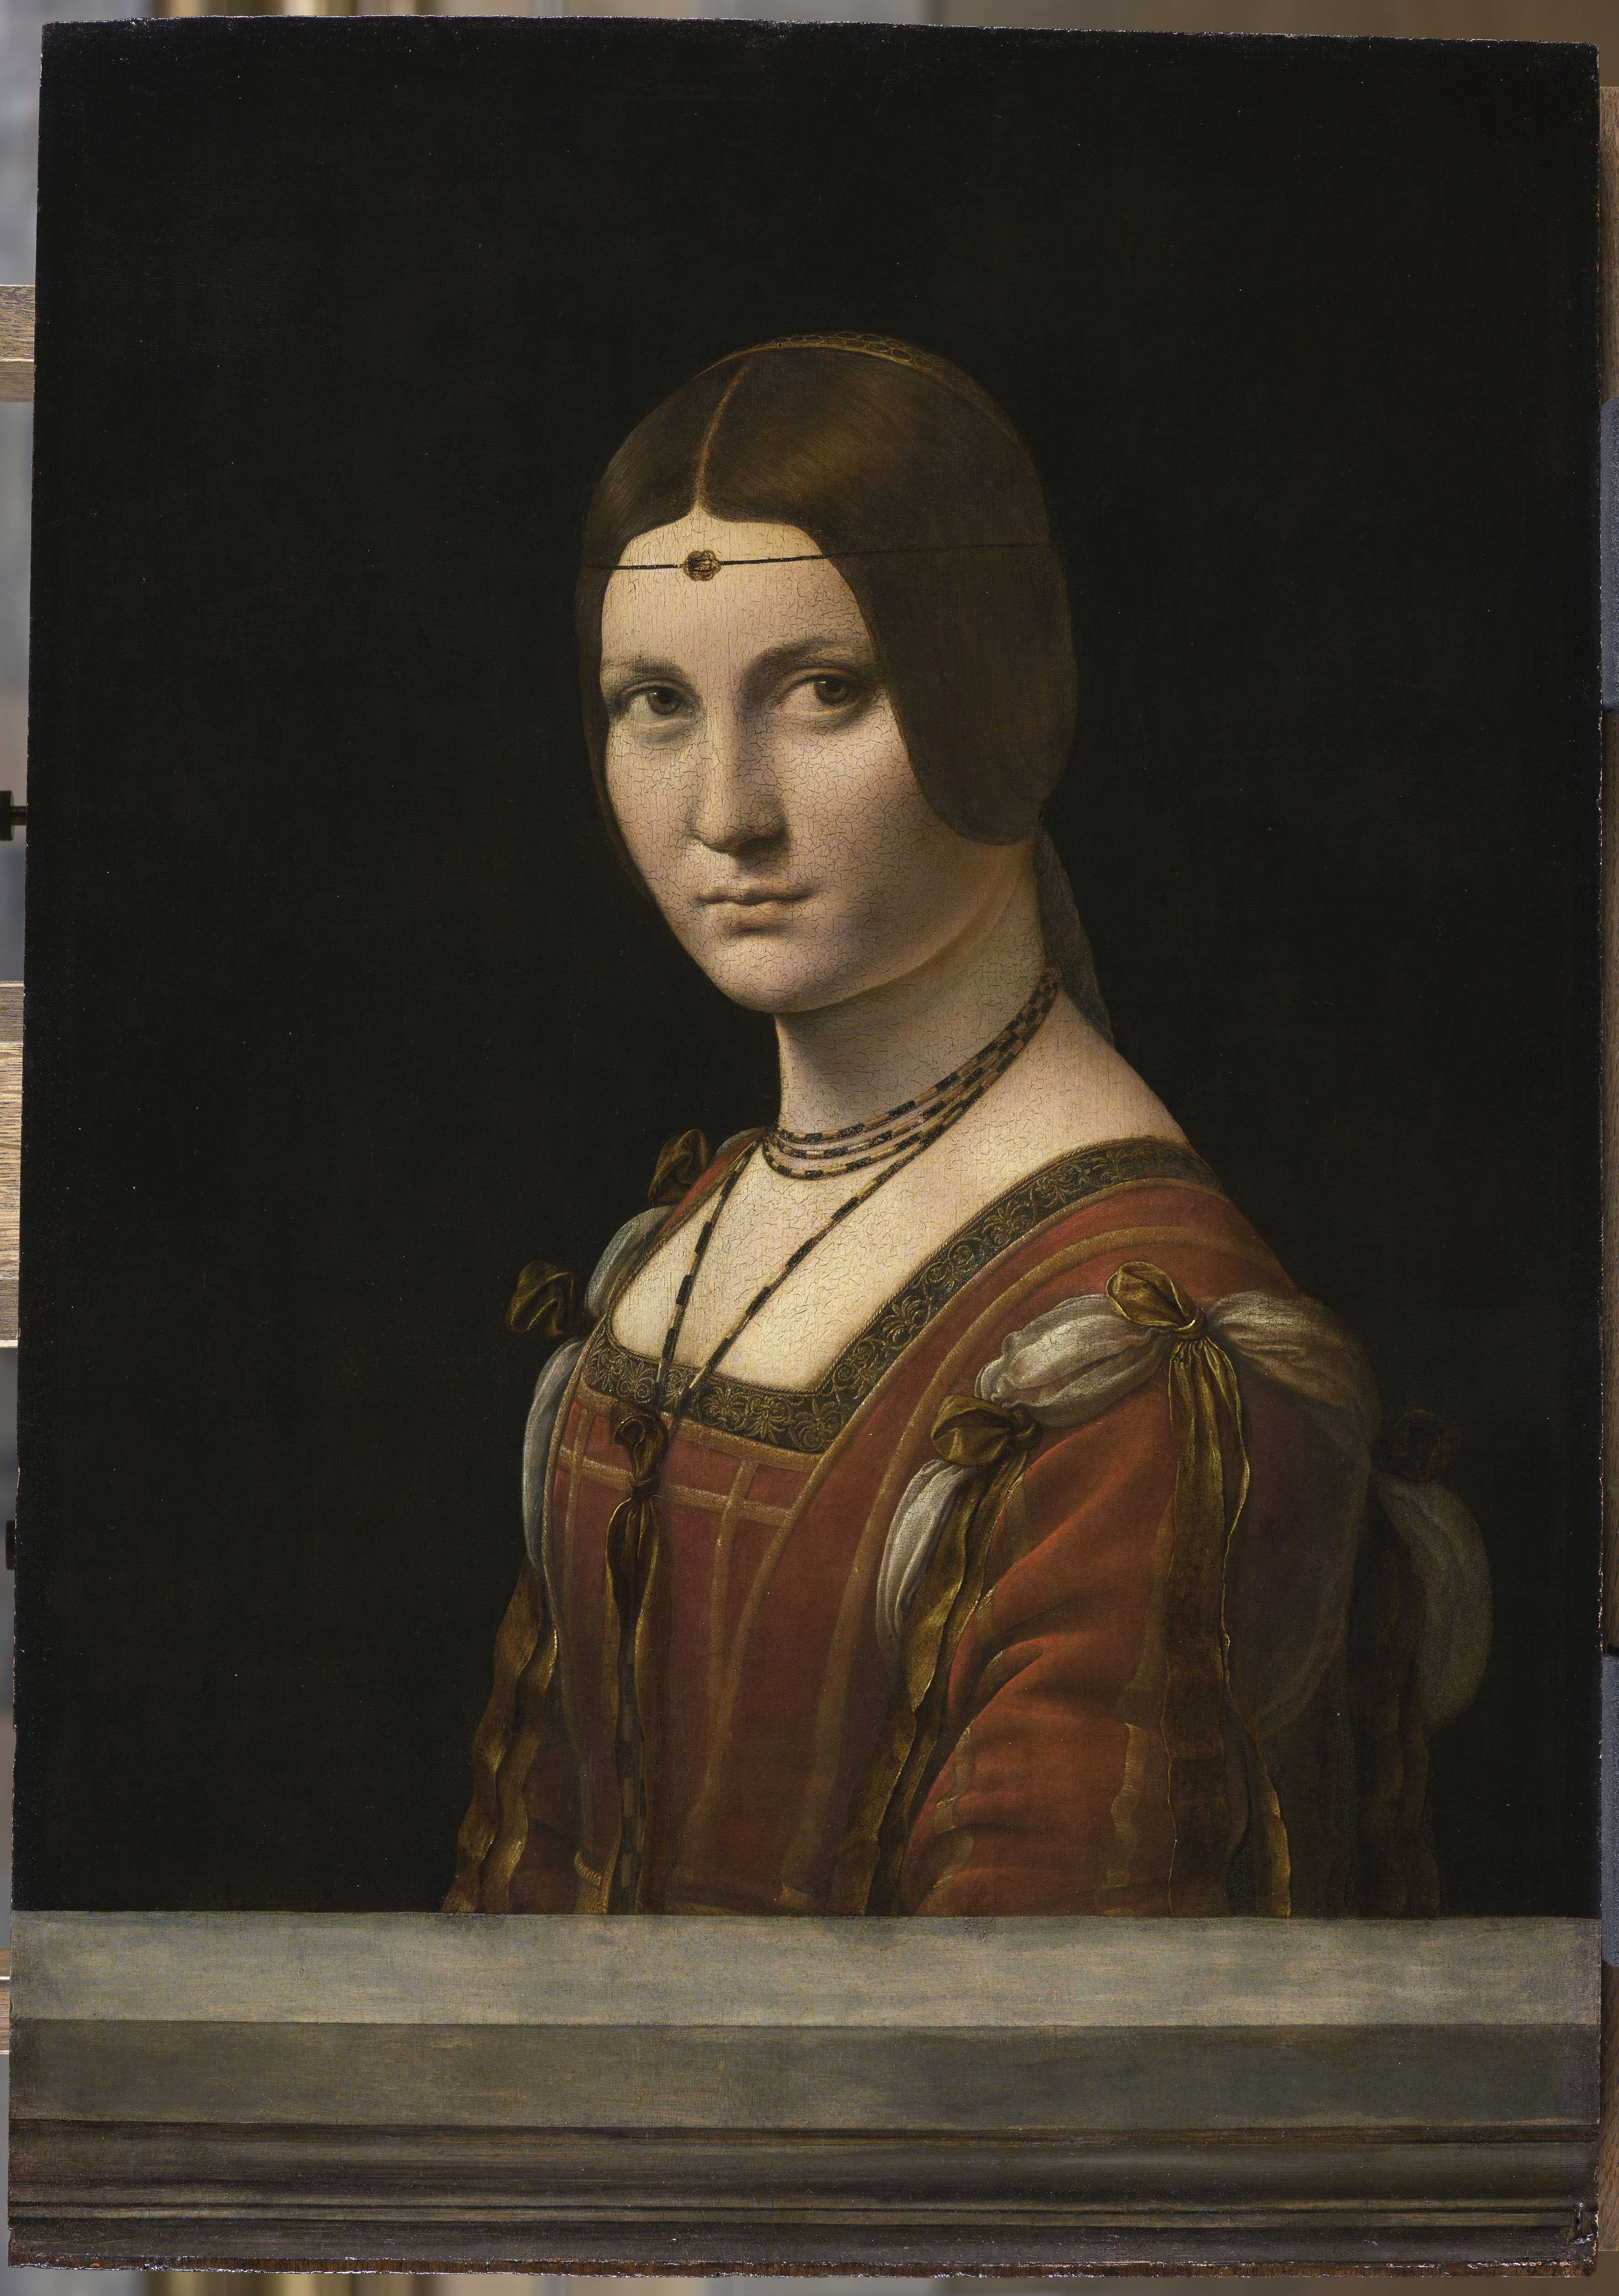 Leonard da Vinci, Exhibition, Louvre Museum, Paris: 24 October 2019-24 February 2020